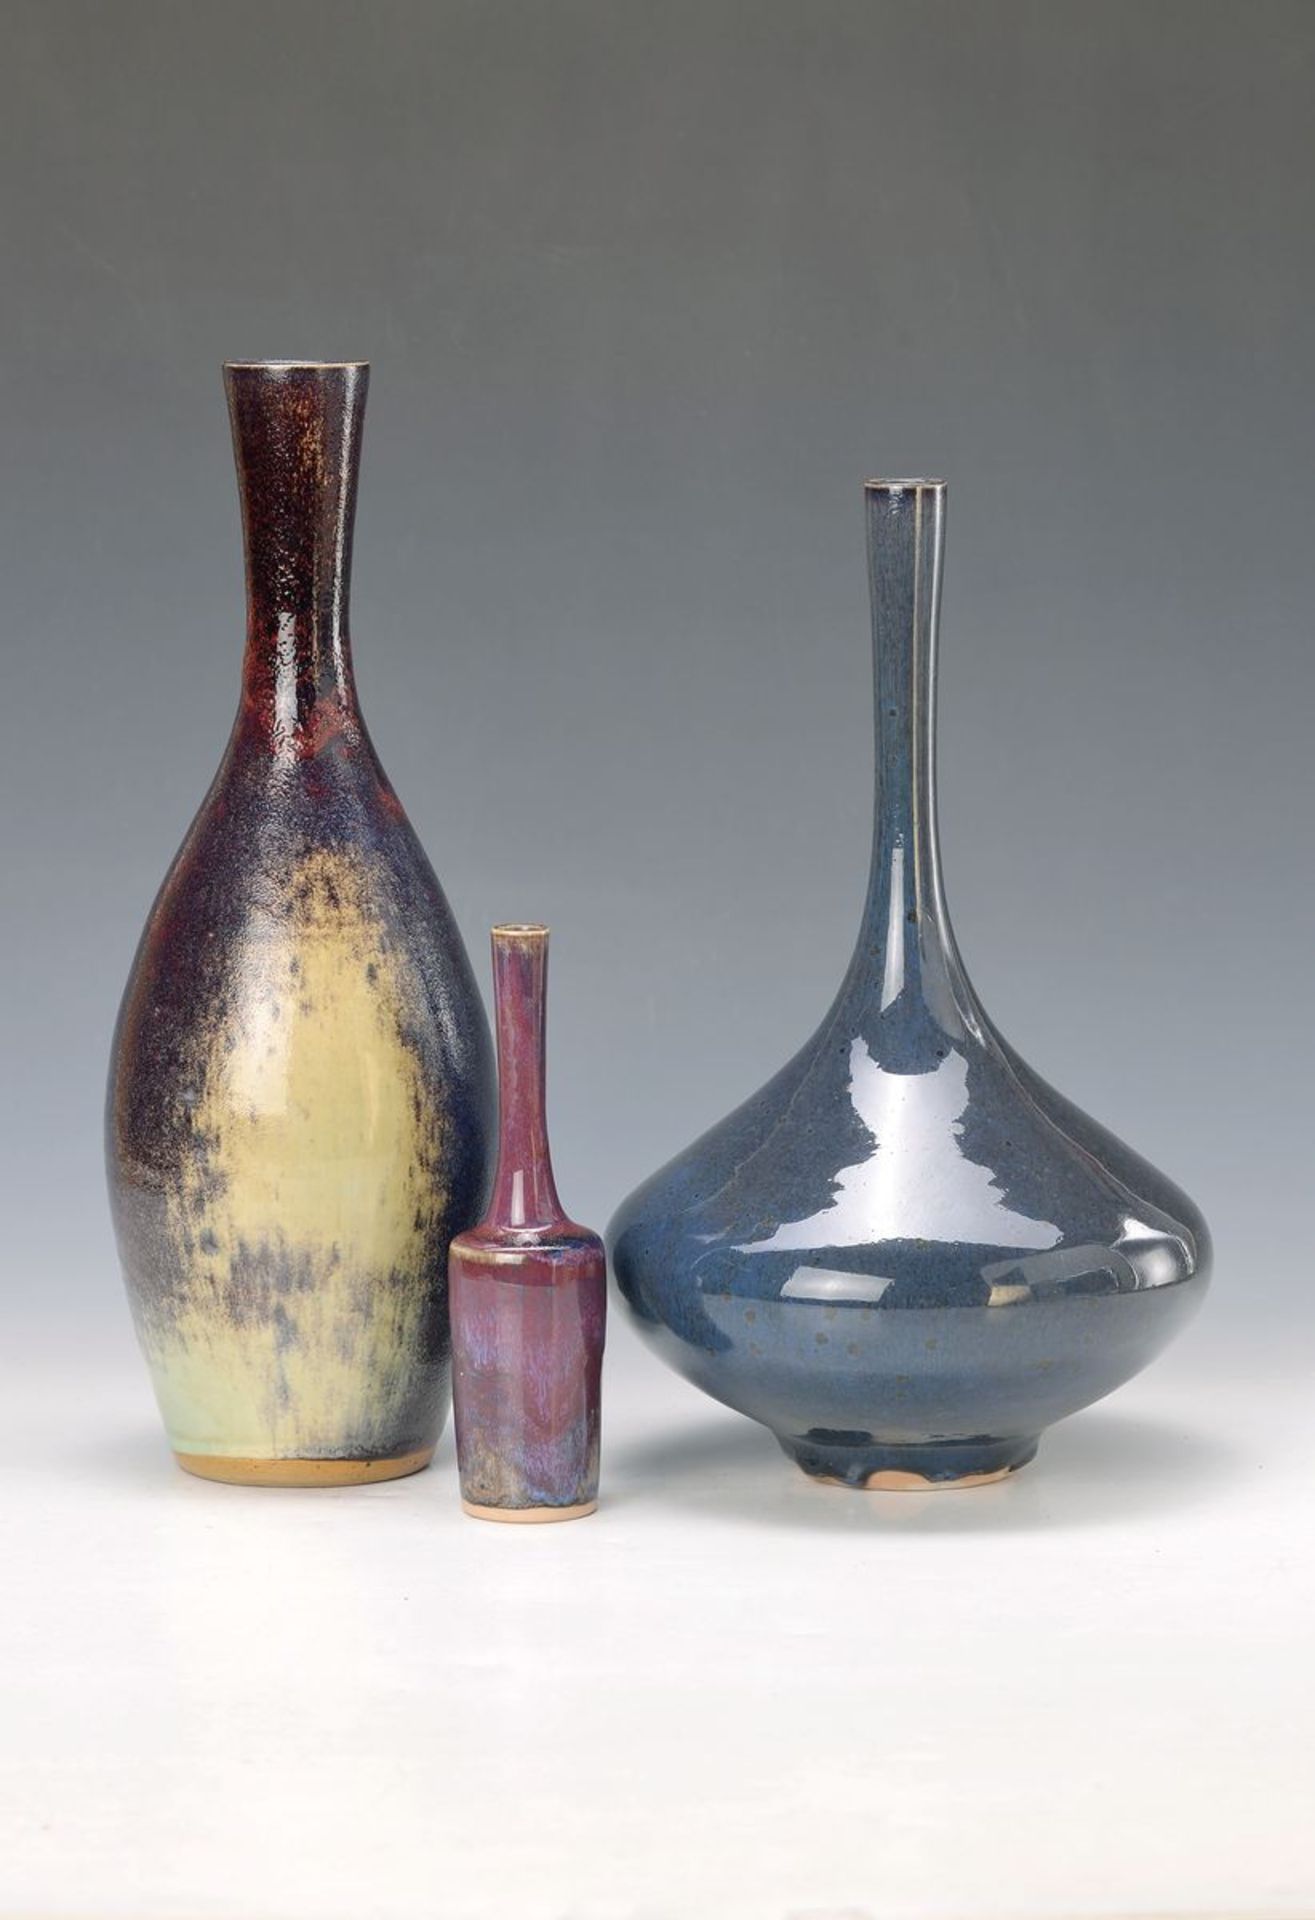 lbrecht Hohlt, Katzbach, three vases, stoneware with elaborate reduction glazes: bellied bottle